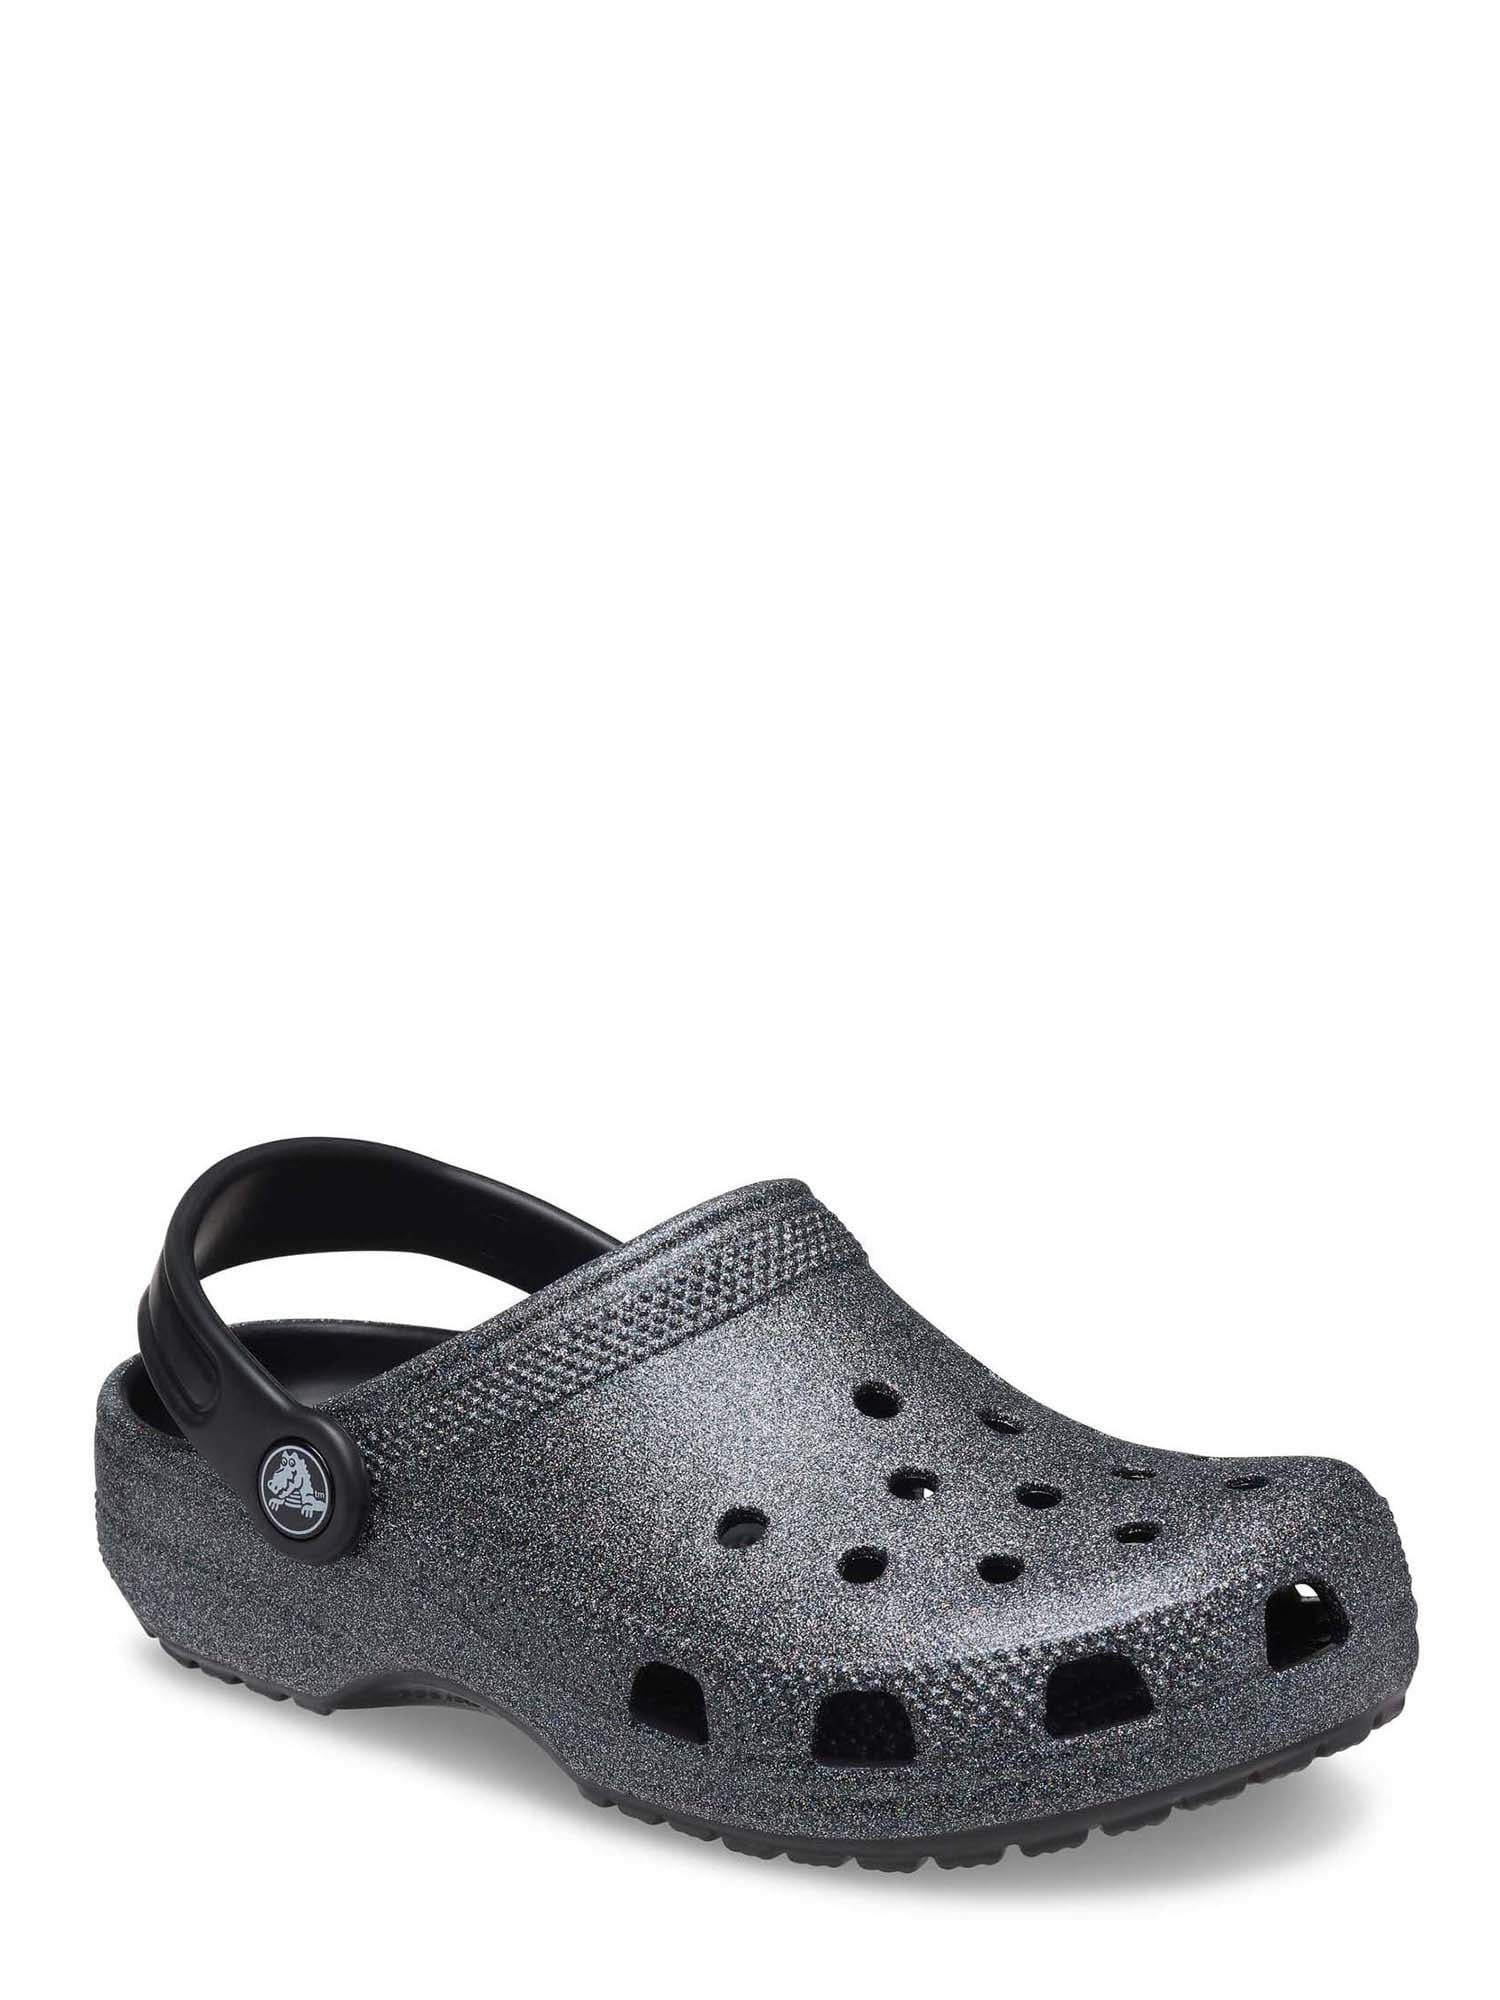 Crocs Toddler & Kids Classic Glitter Clog Sandal, Sizes 4-6 | Walmart (US)